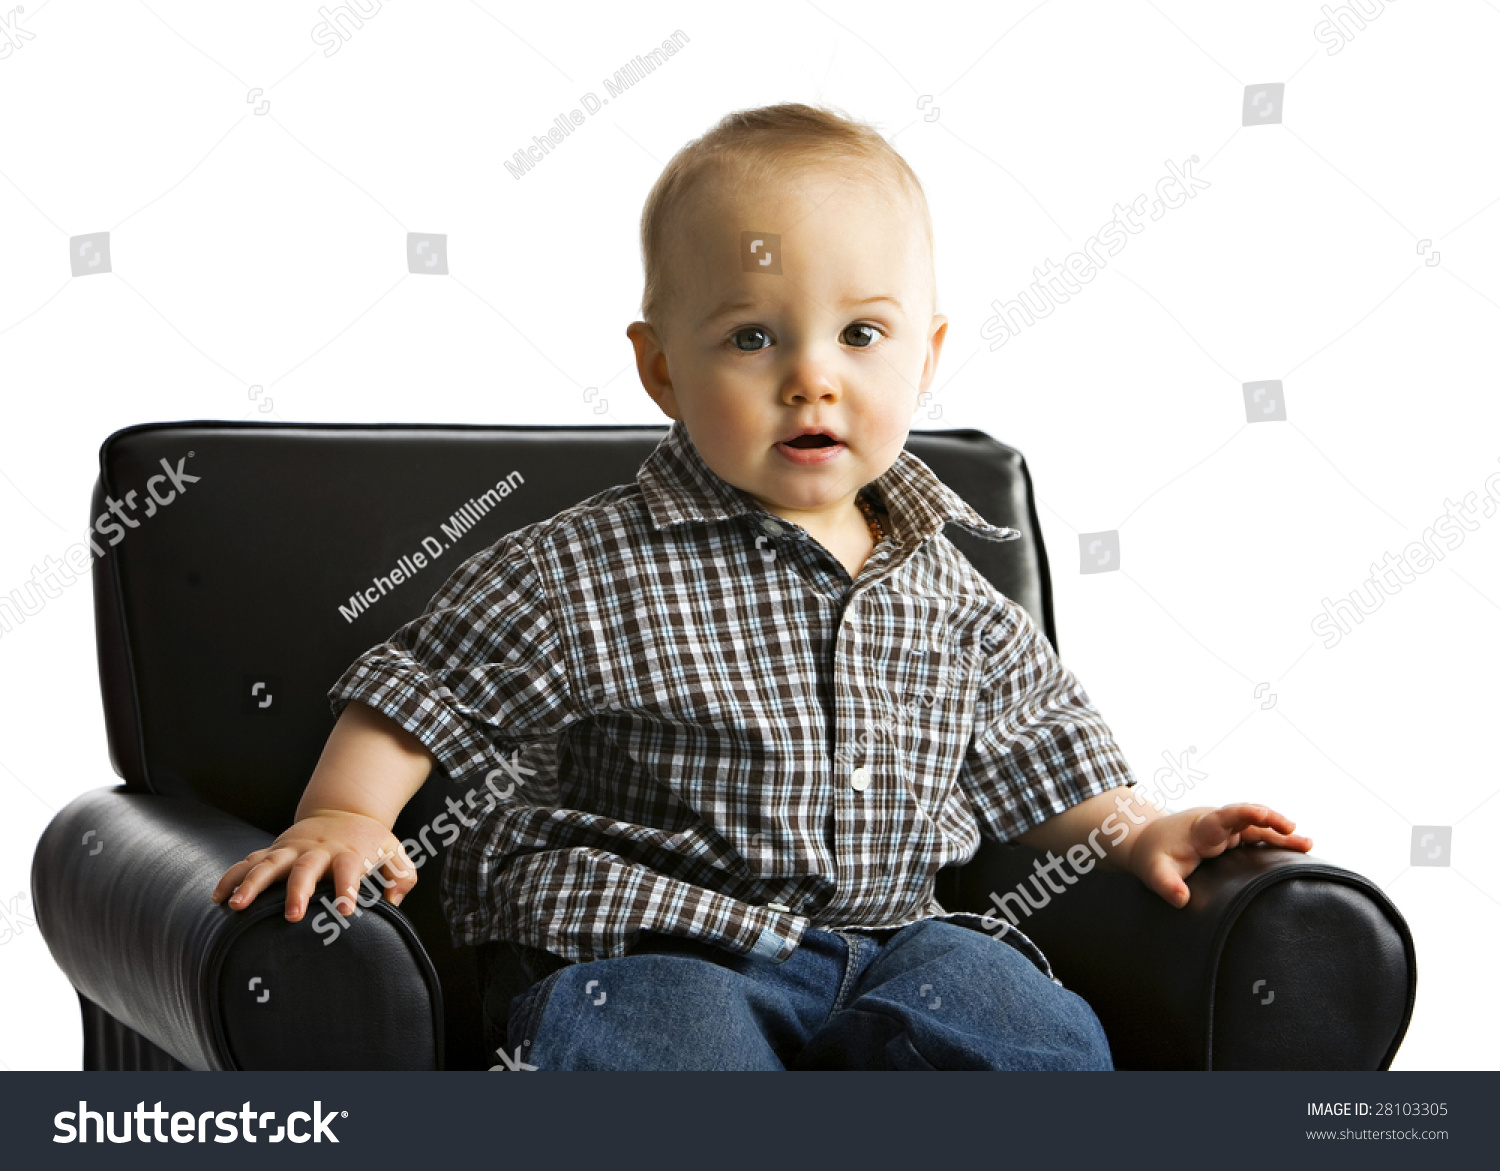 child's overstuffed chair